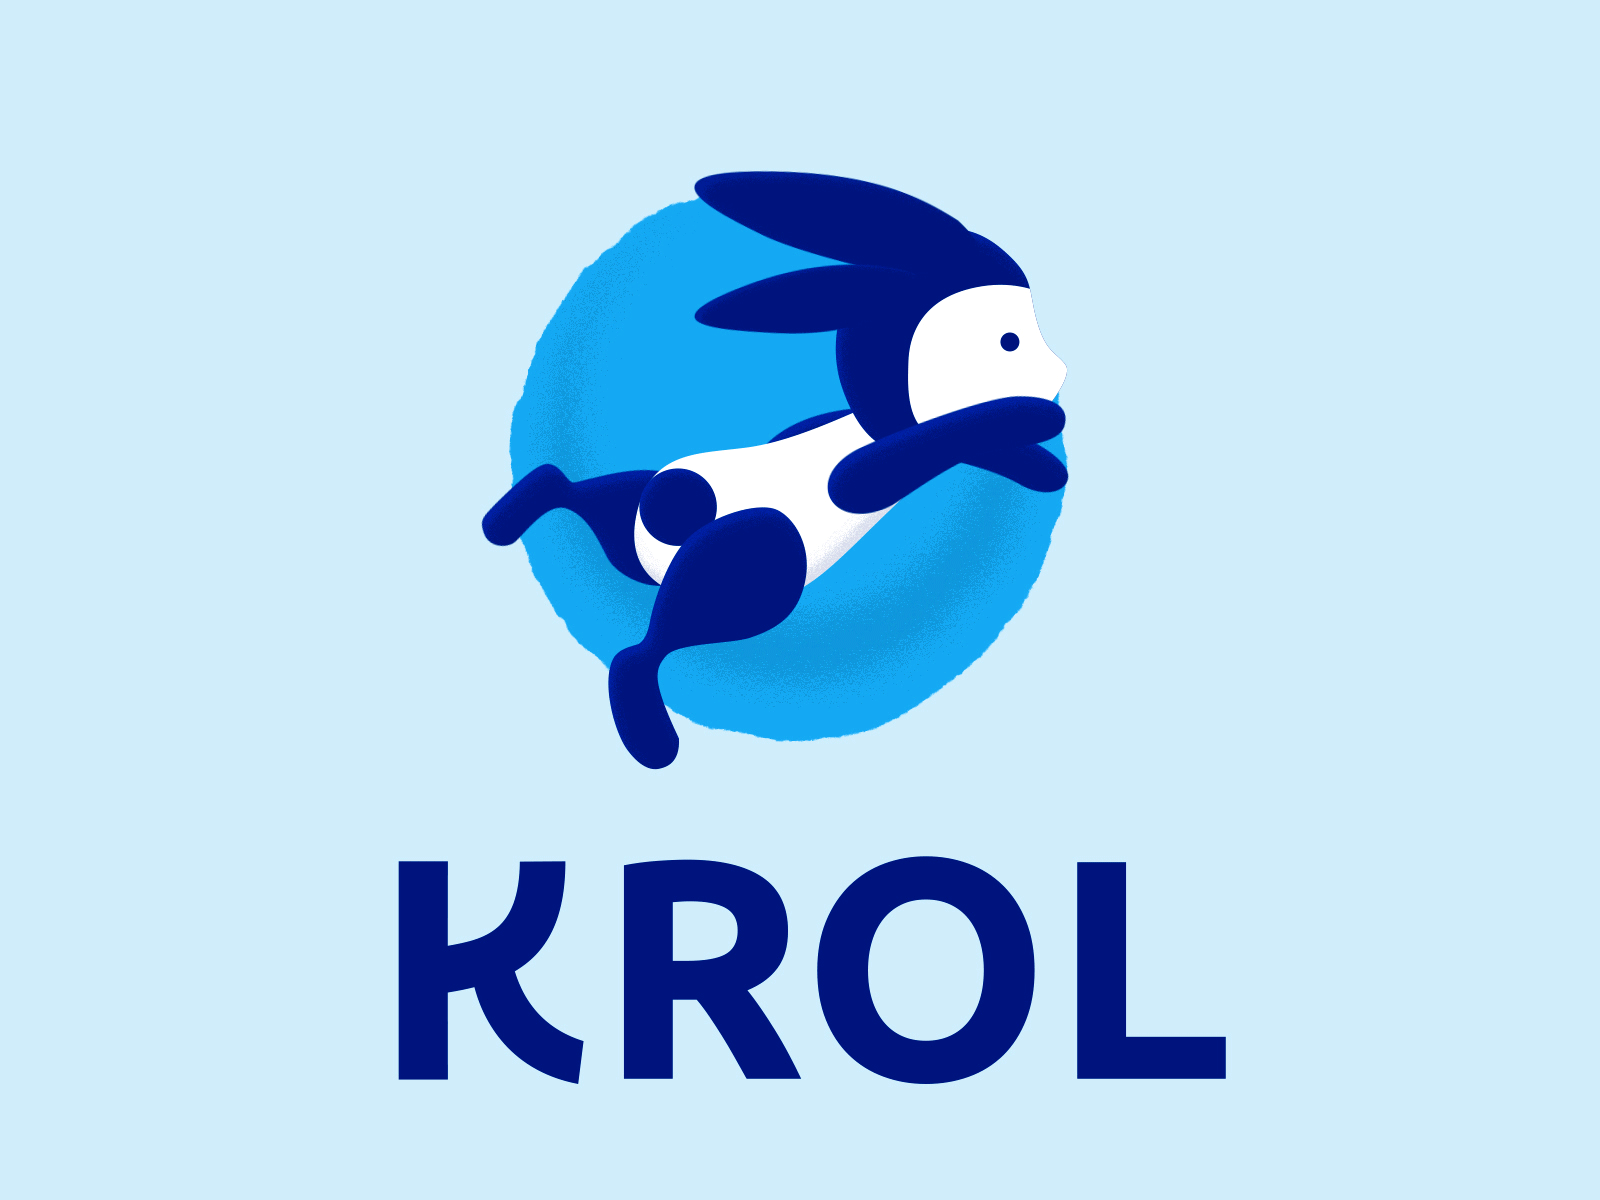 KROL Logotype